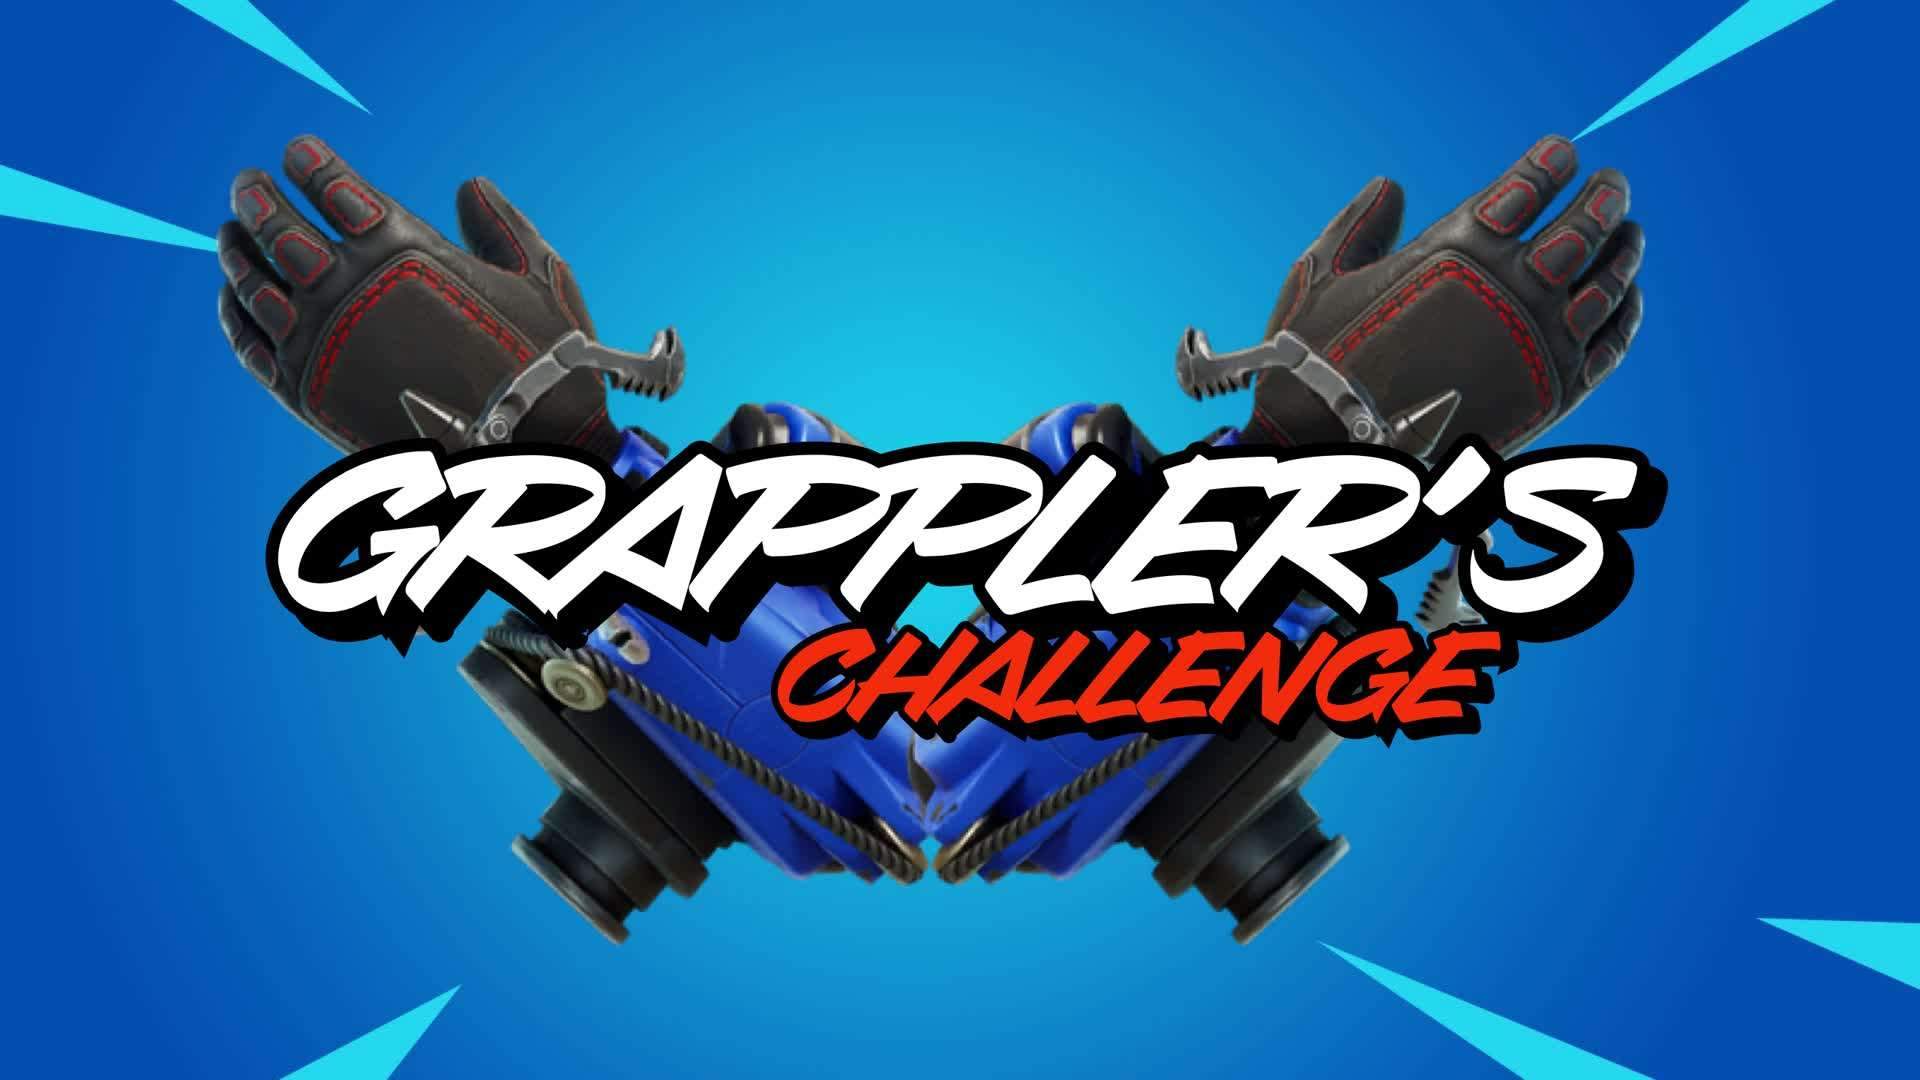 Grappler's Challenge